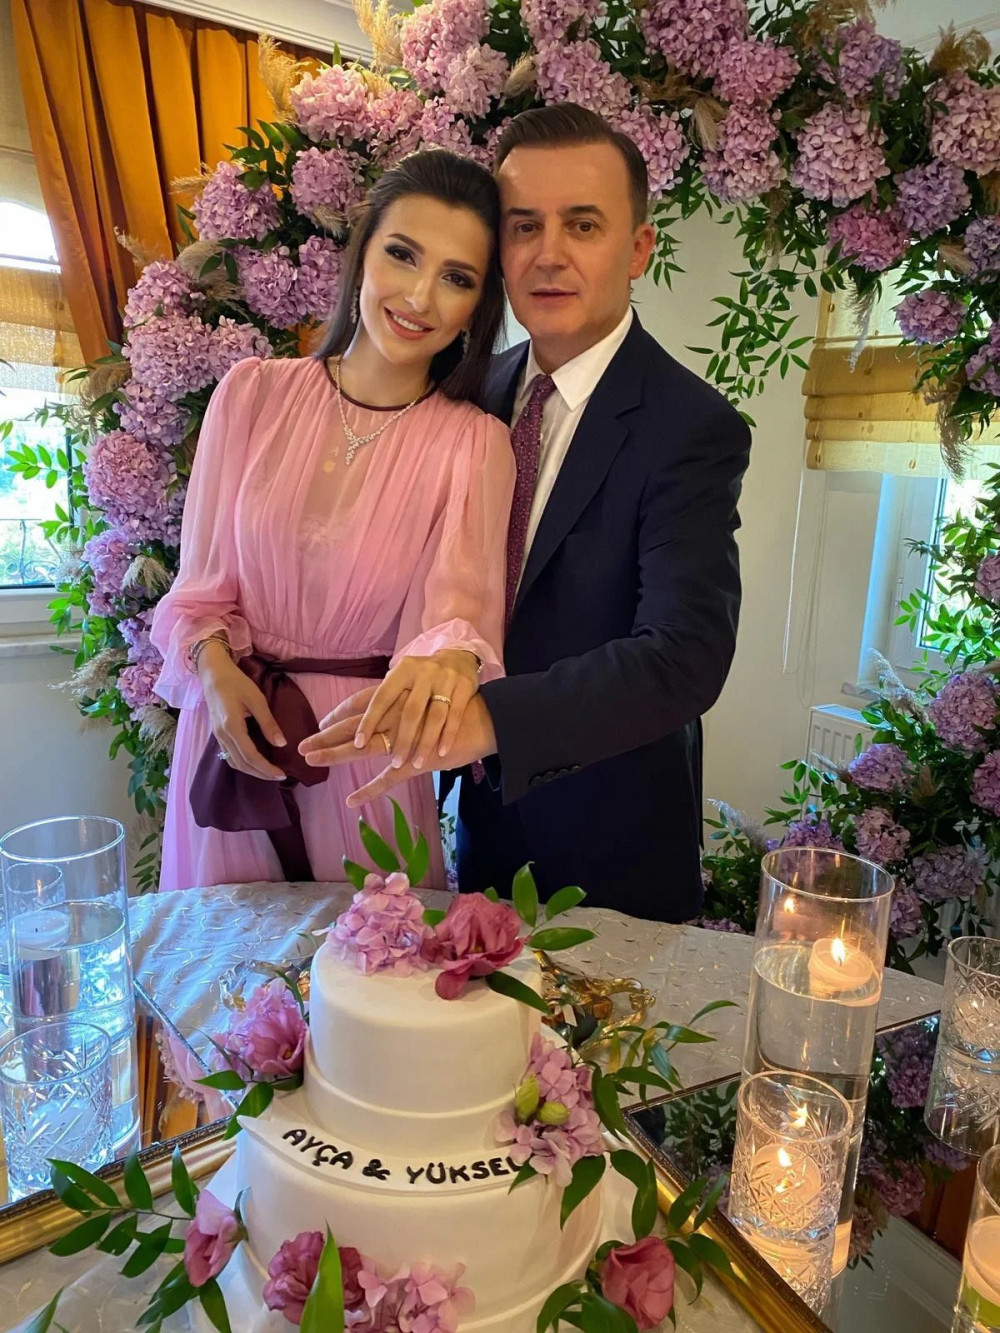 Ankara Cumhuriyet Başsavcısı Yüksel Kocaman nişanlandı! - Resim: 1